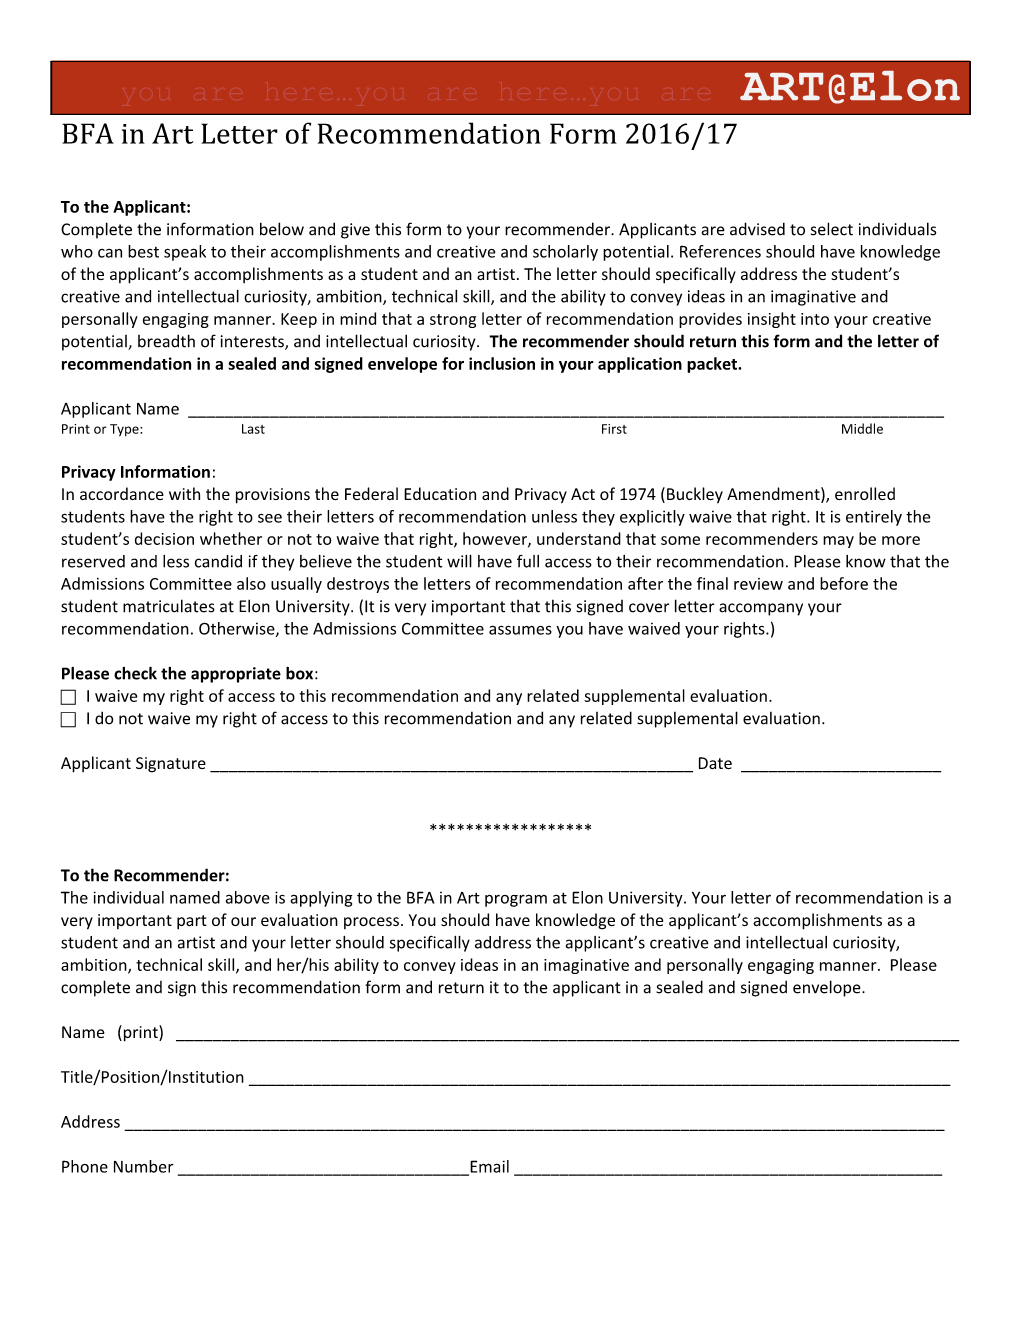 BFA in Art Letter of Recommendation Form2016/17